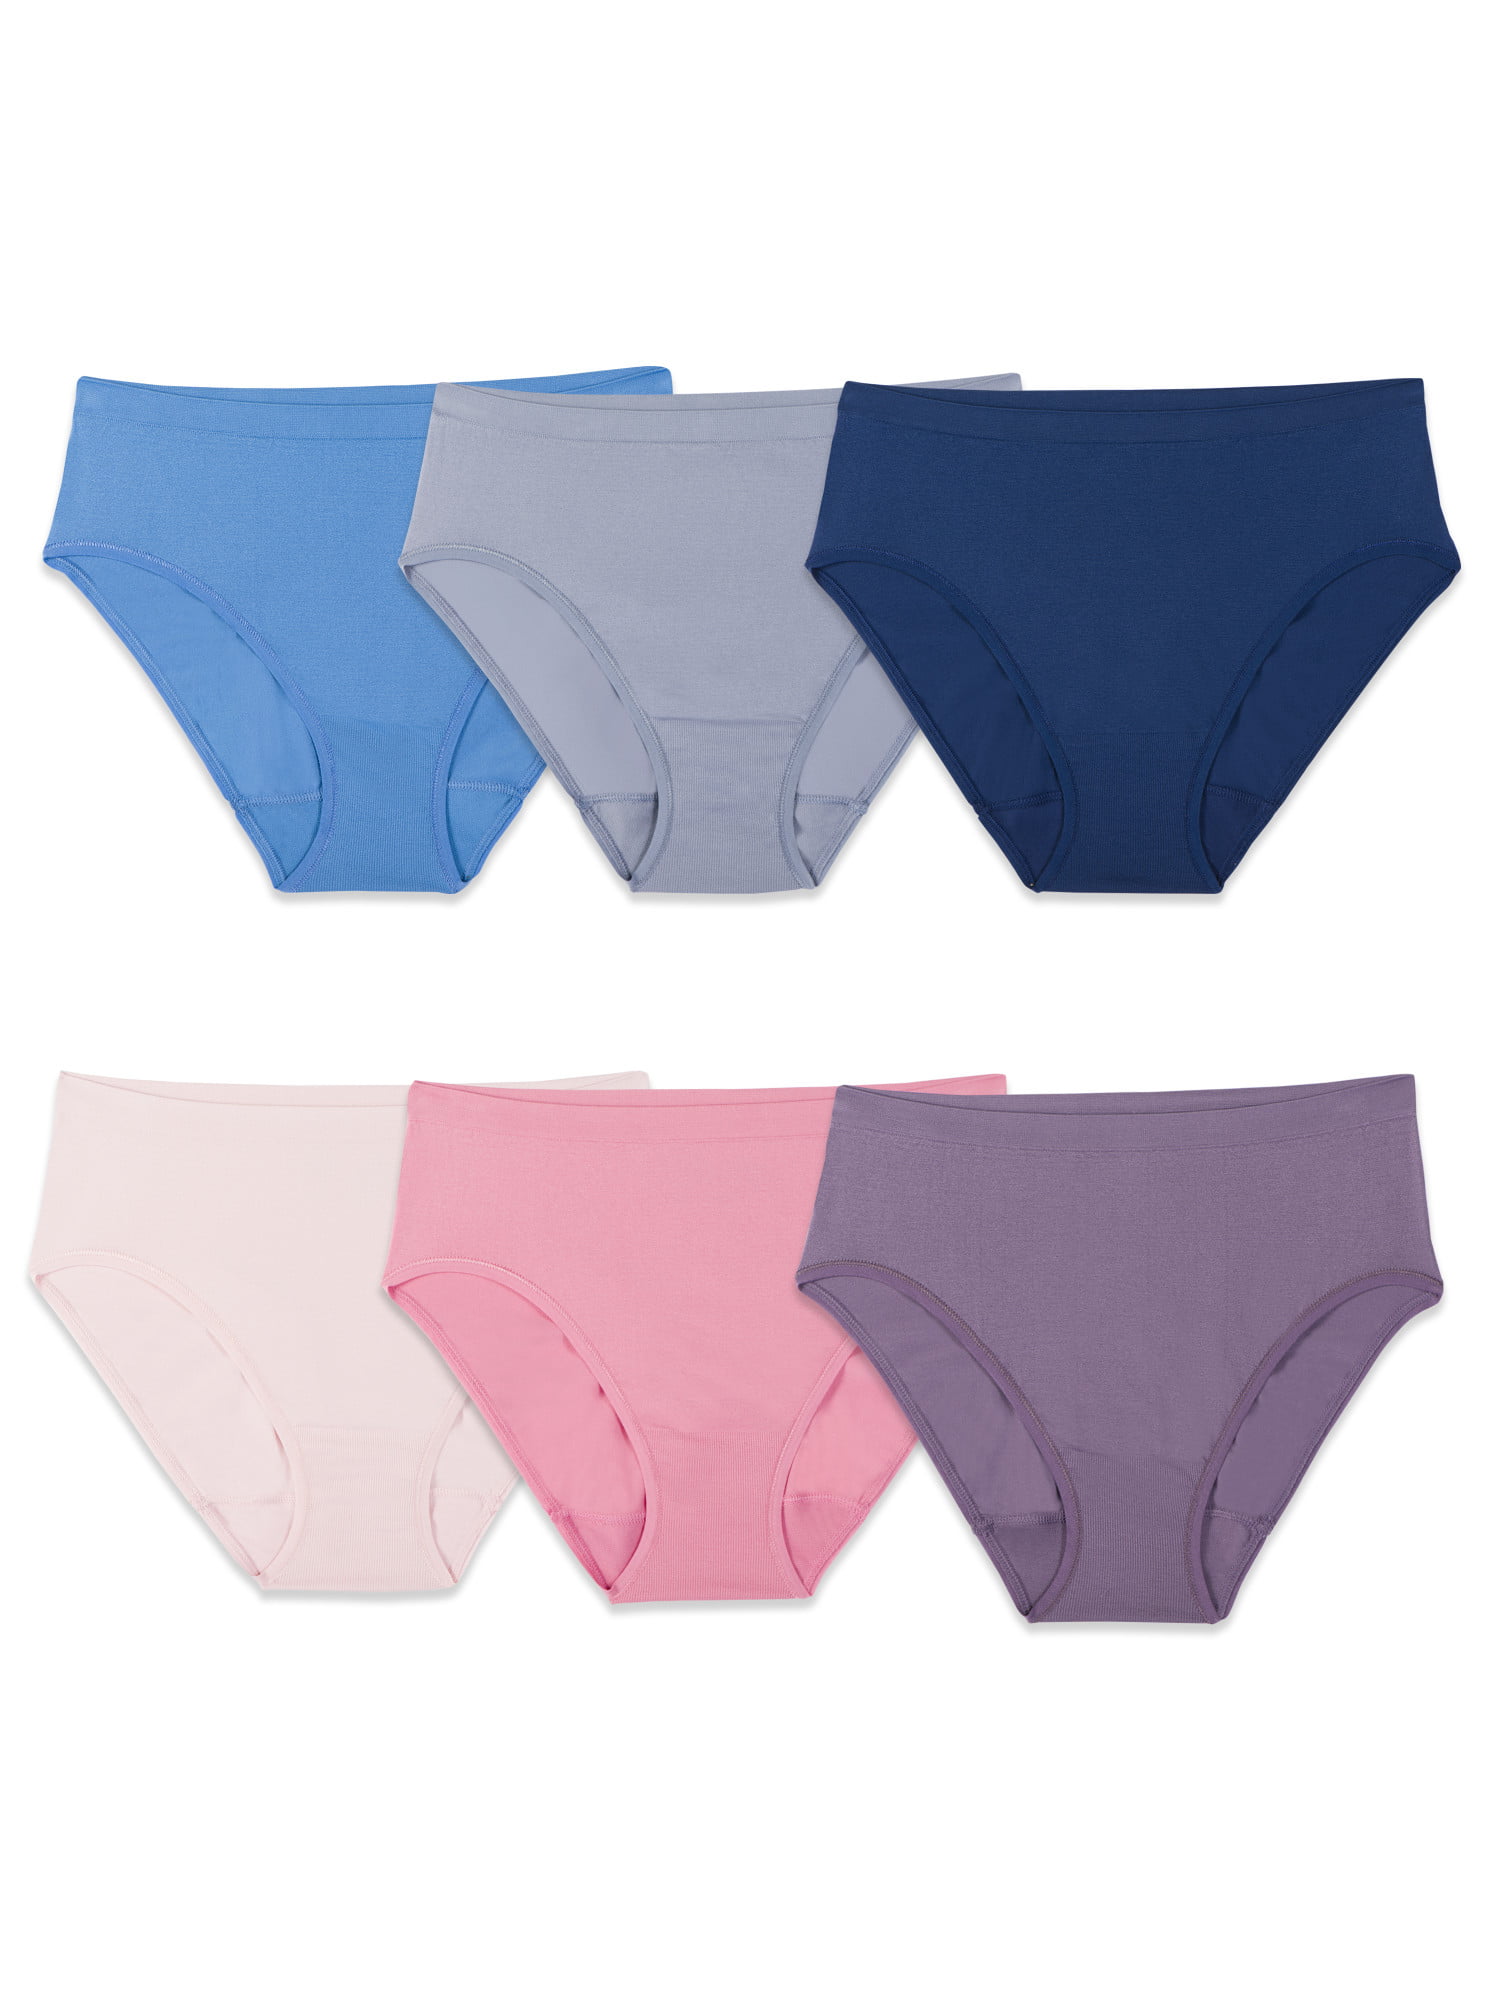 Boys Kids Underwear 3 Pack Briefs Pants Knickers 100% Cotton 5-10 Years 